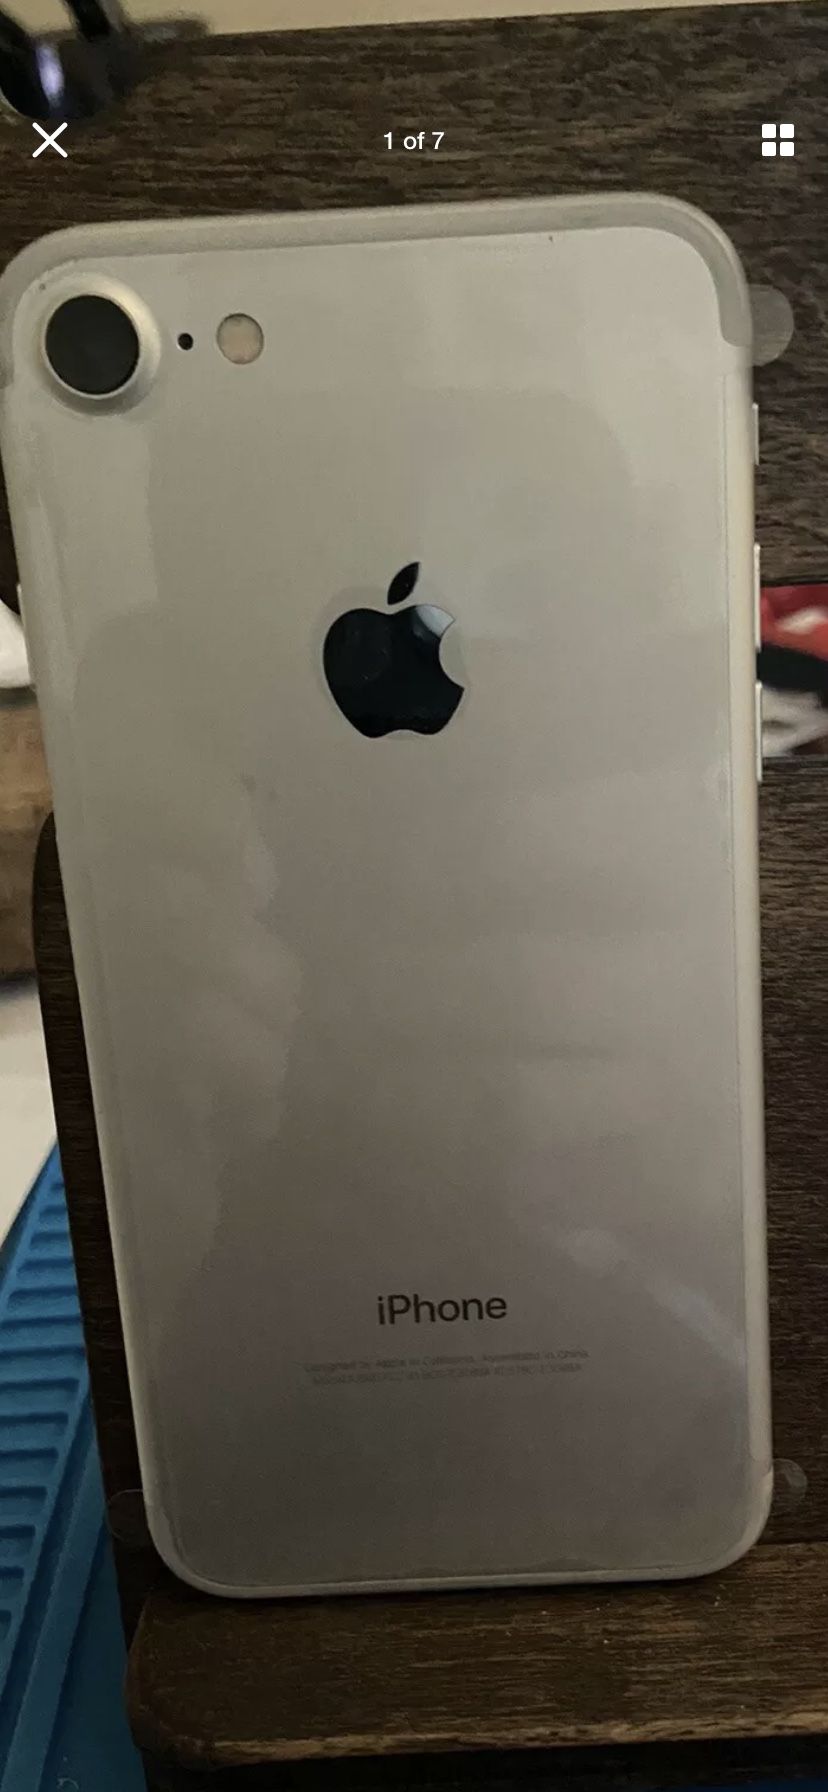 iPhone 7 unlocked- OPEN BOX/ NEW- silver- 32 gb